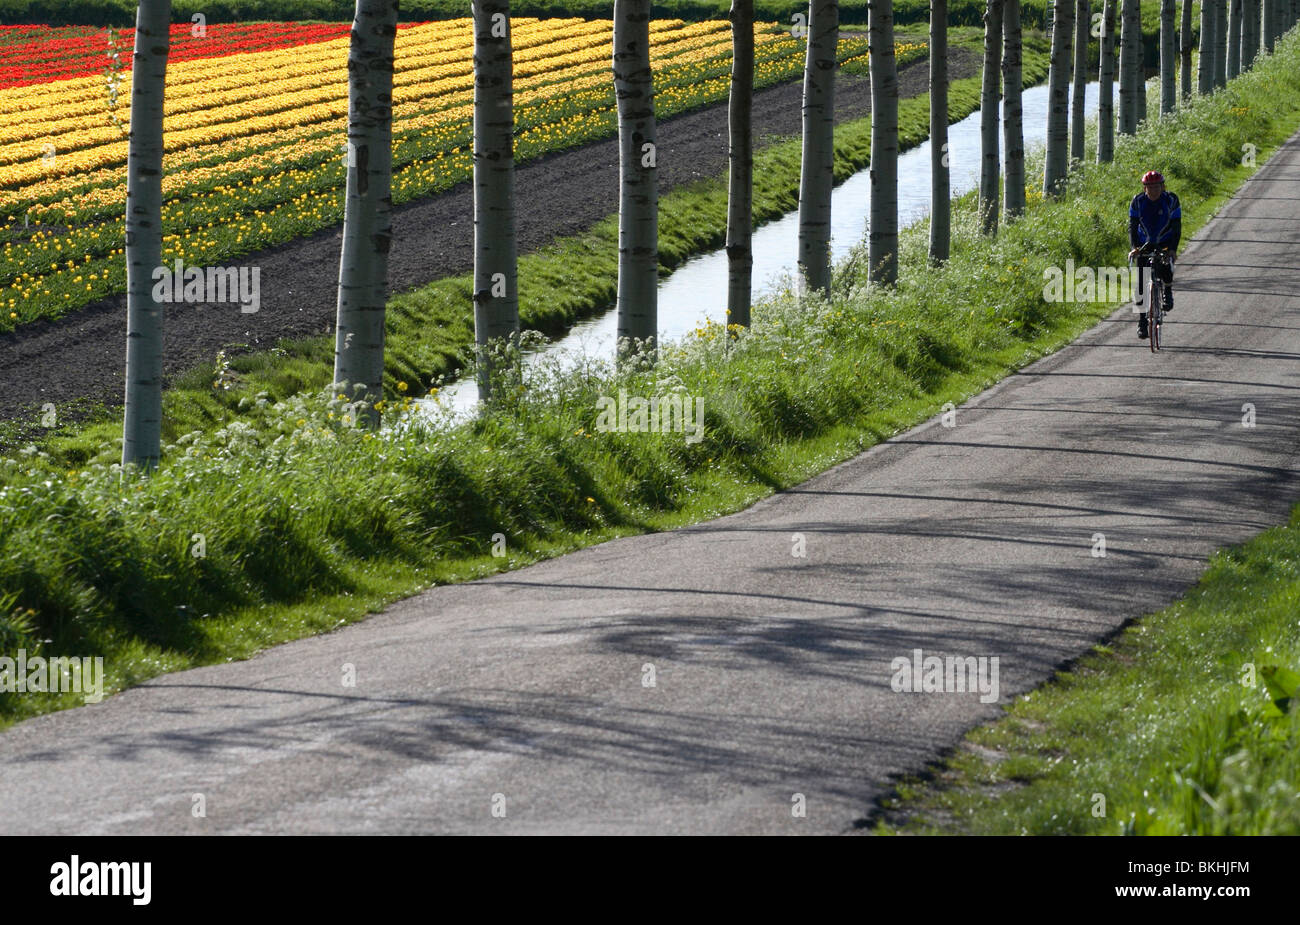 Tulpenveld met fietser; Tulip field with cyclist Stock Photo